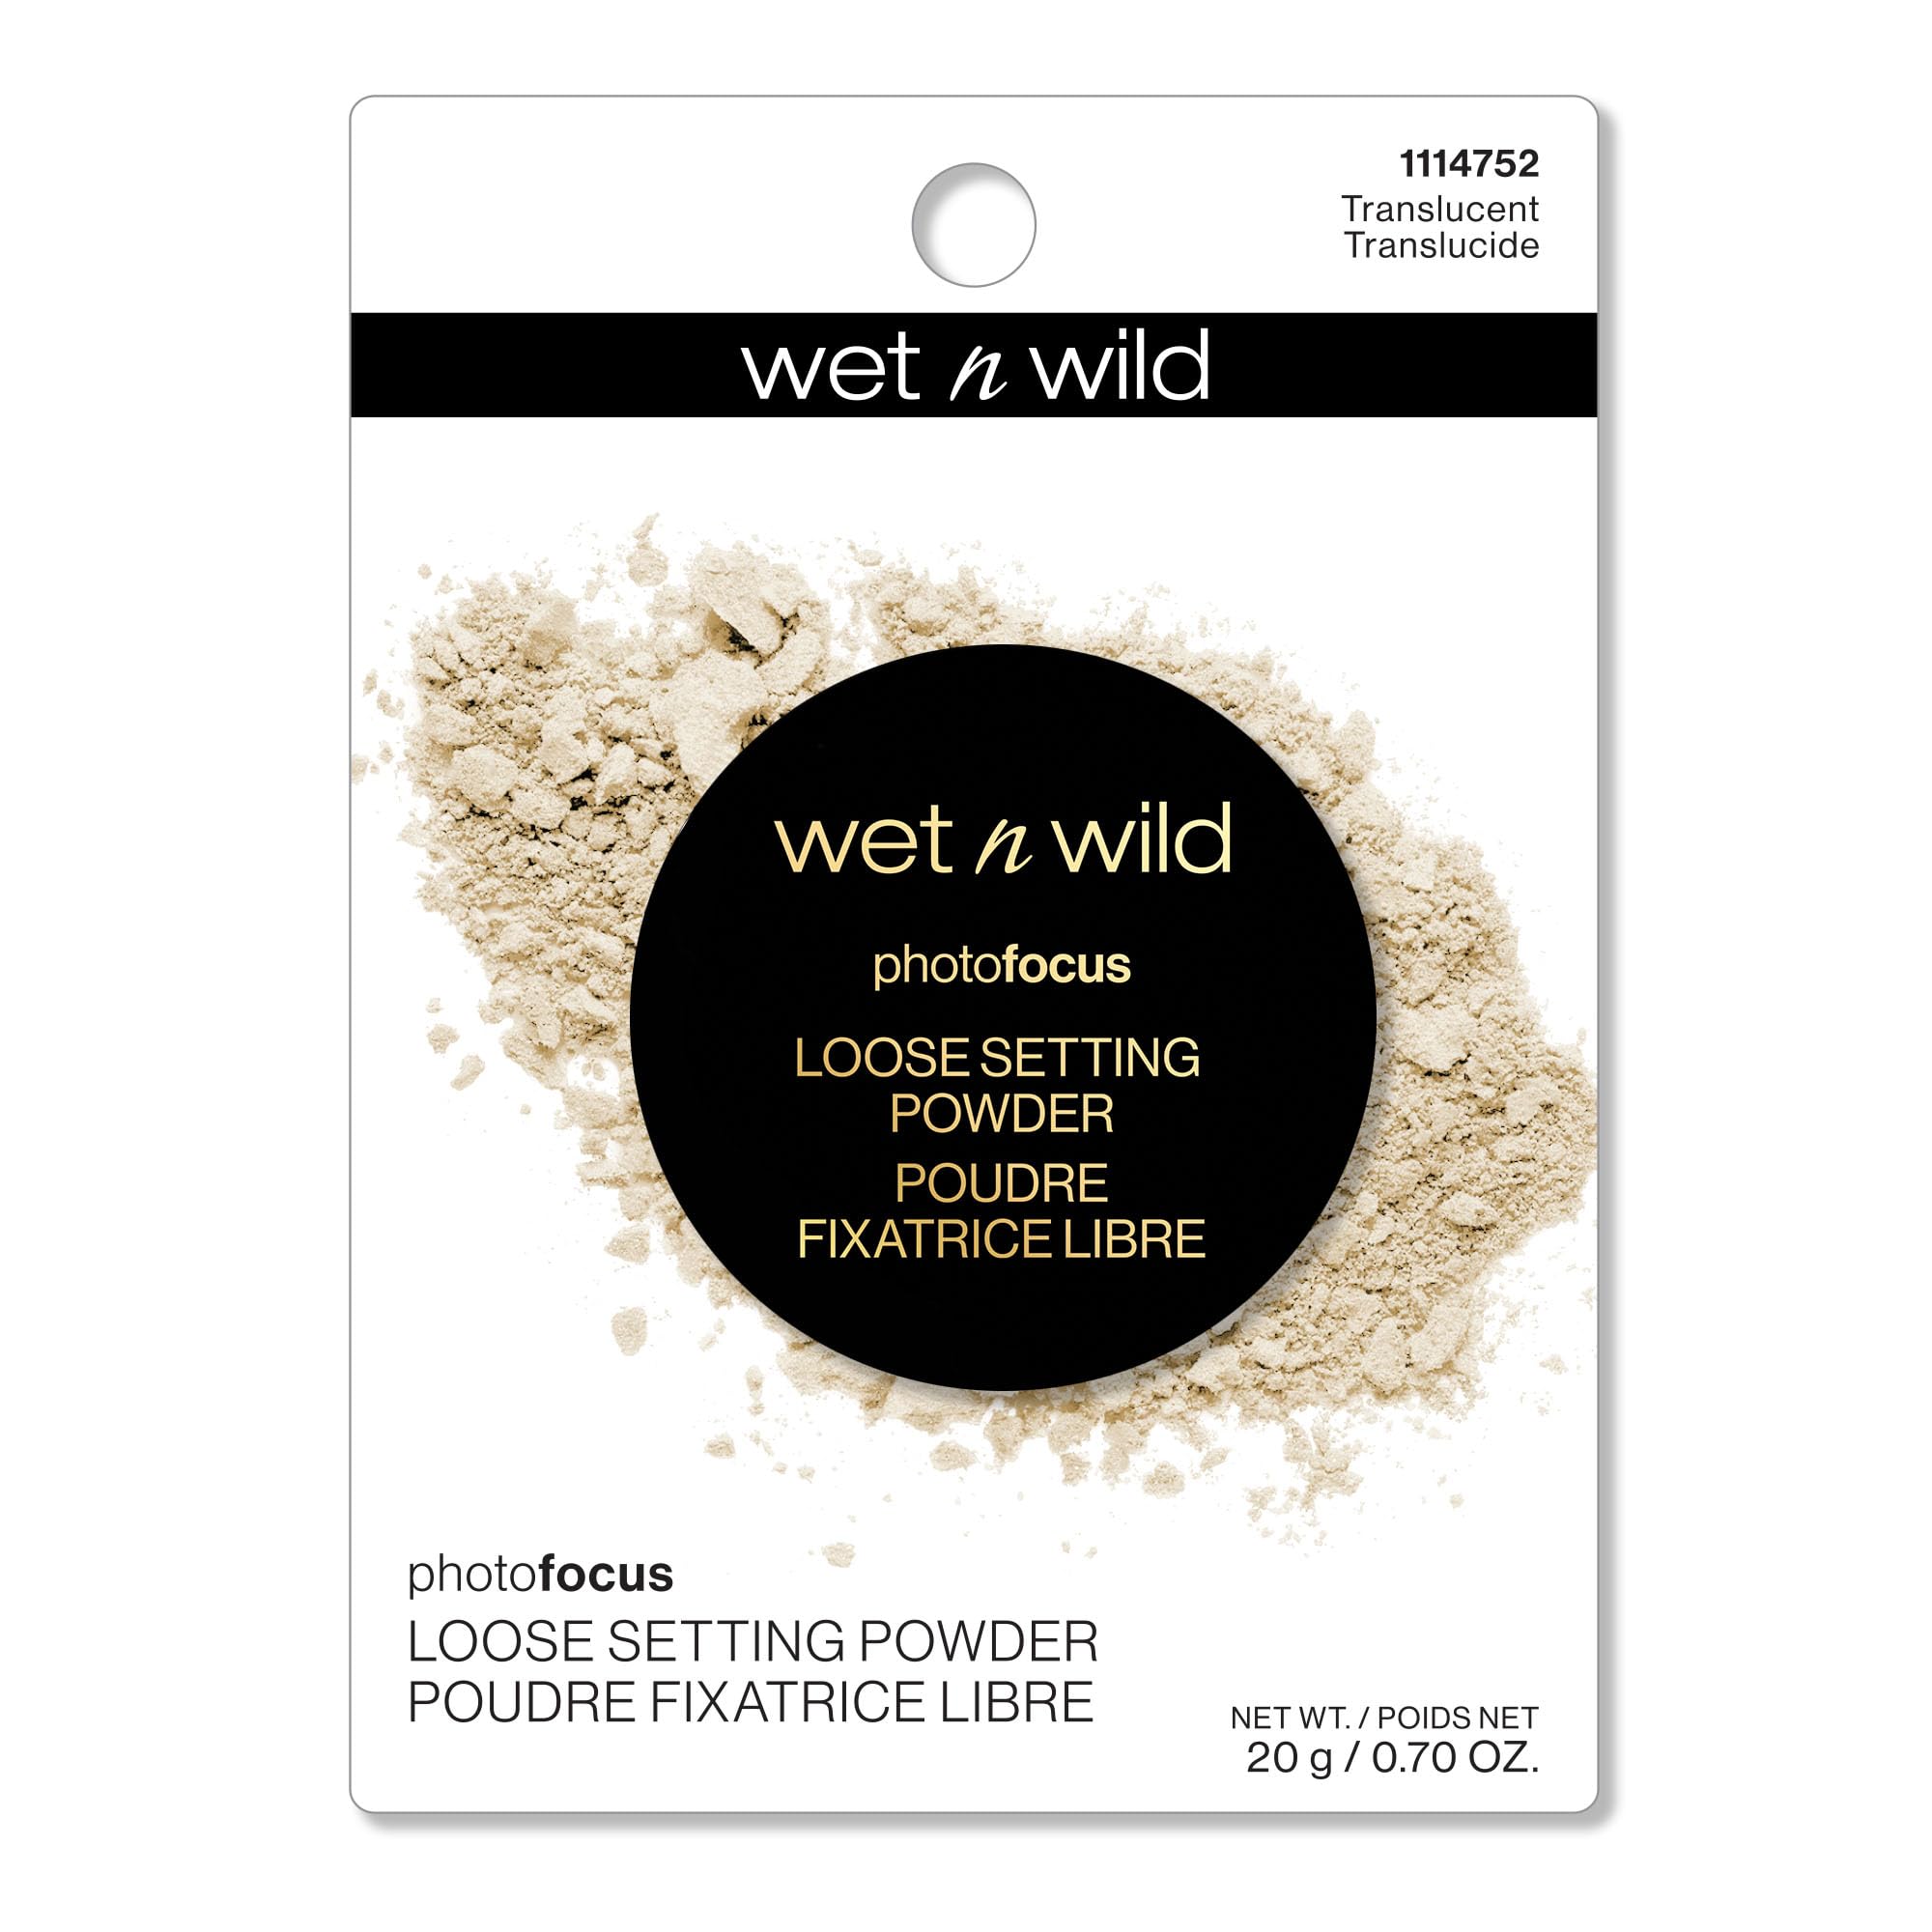 Loose Setting Powder By Wet n Wild Photo Focus Loose Finishing Powder Off-White Translucent